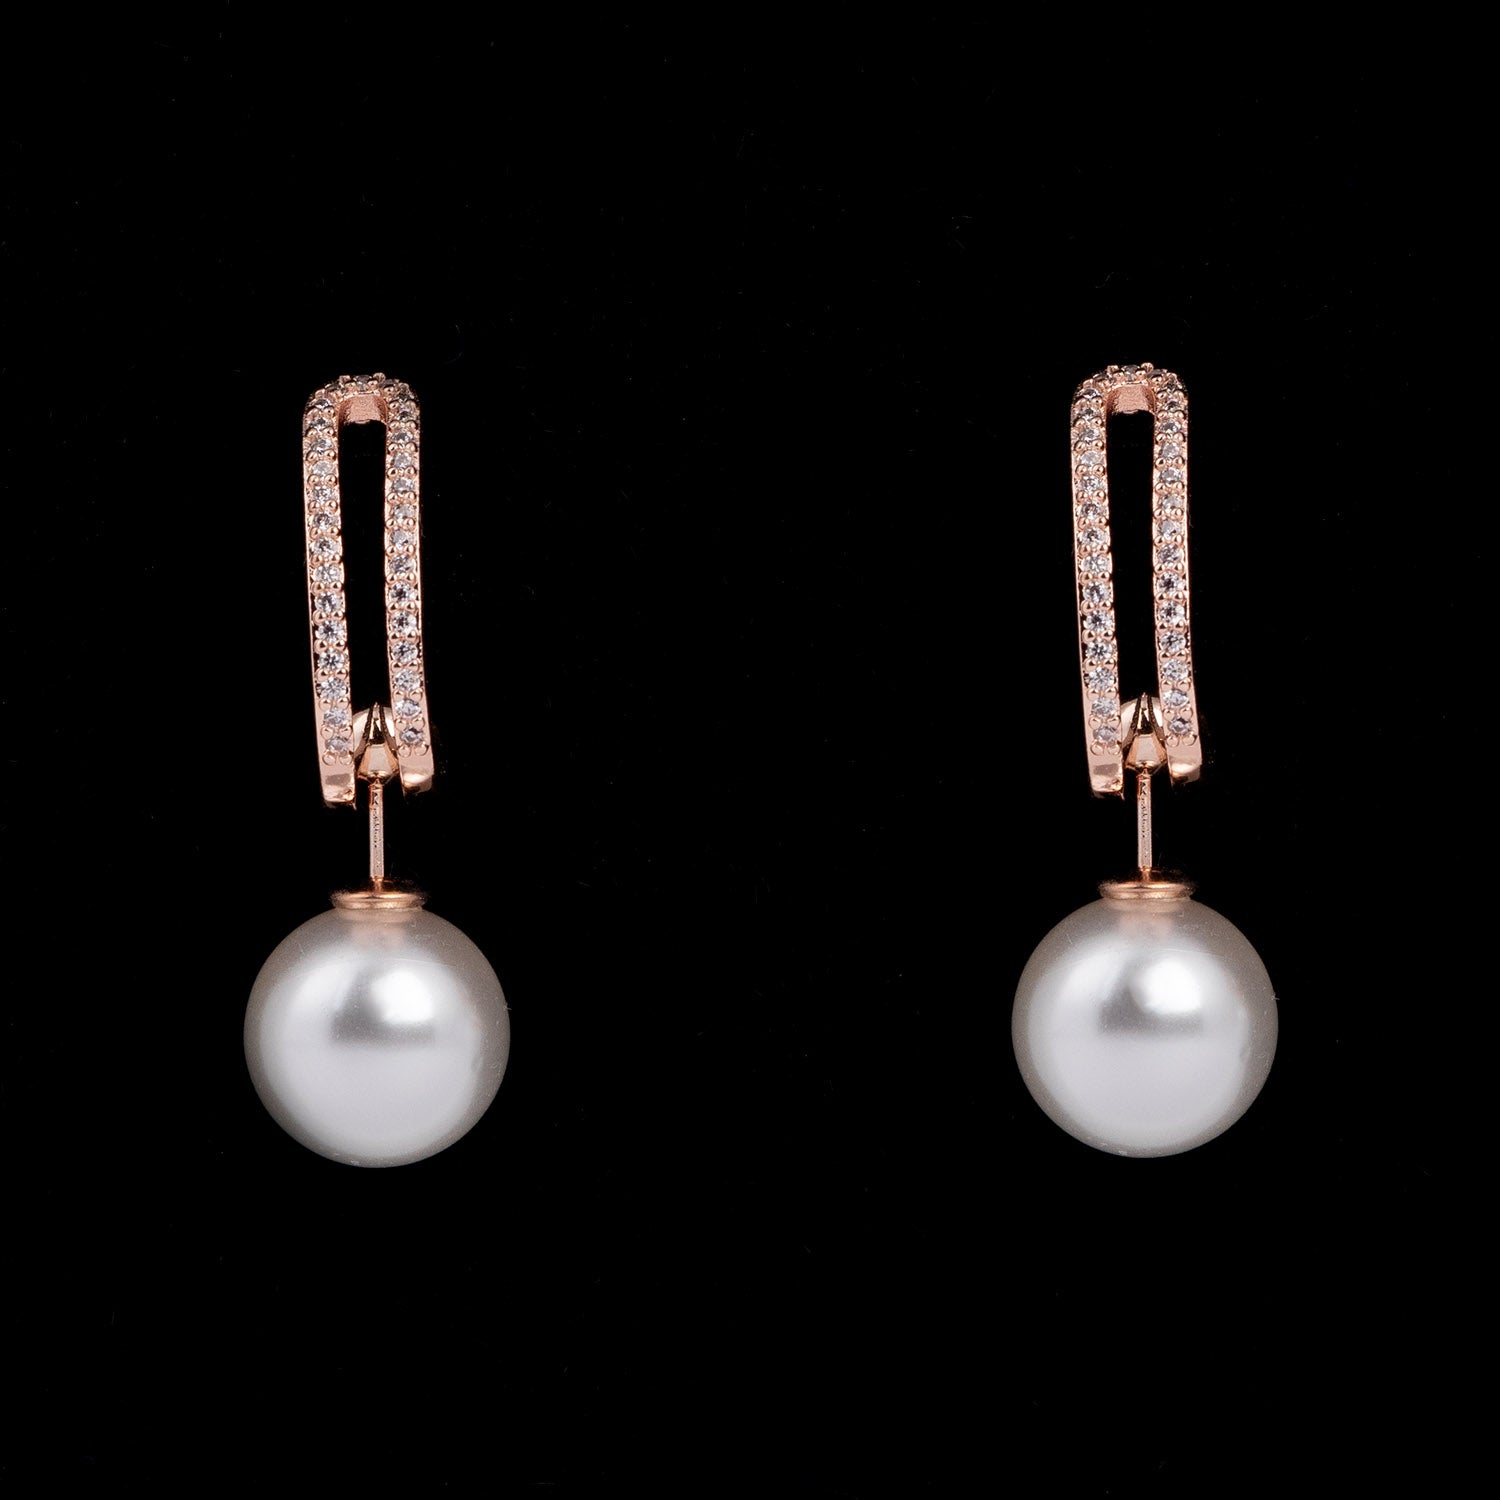 W Premium Jewellery Earrings 4 in 1 Pearl Rose Gold